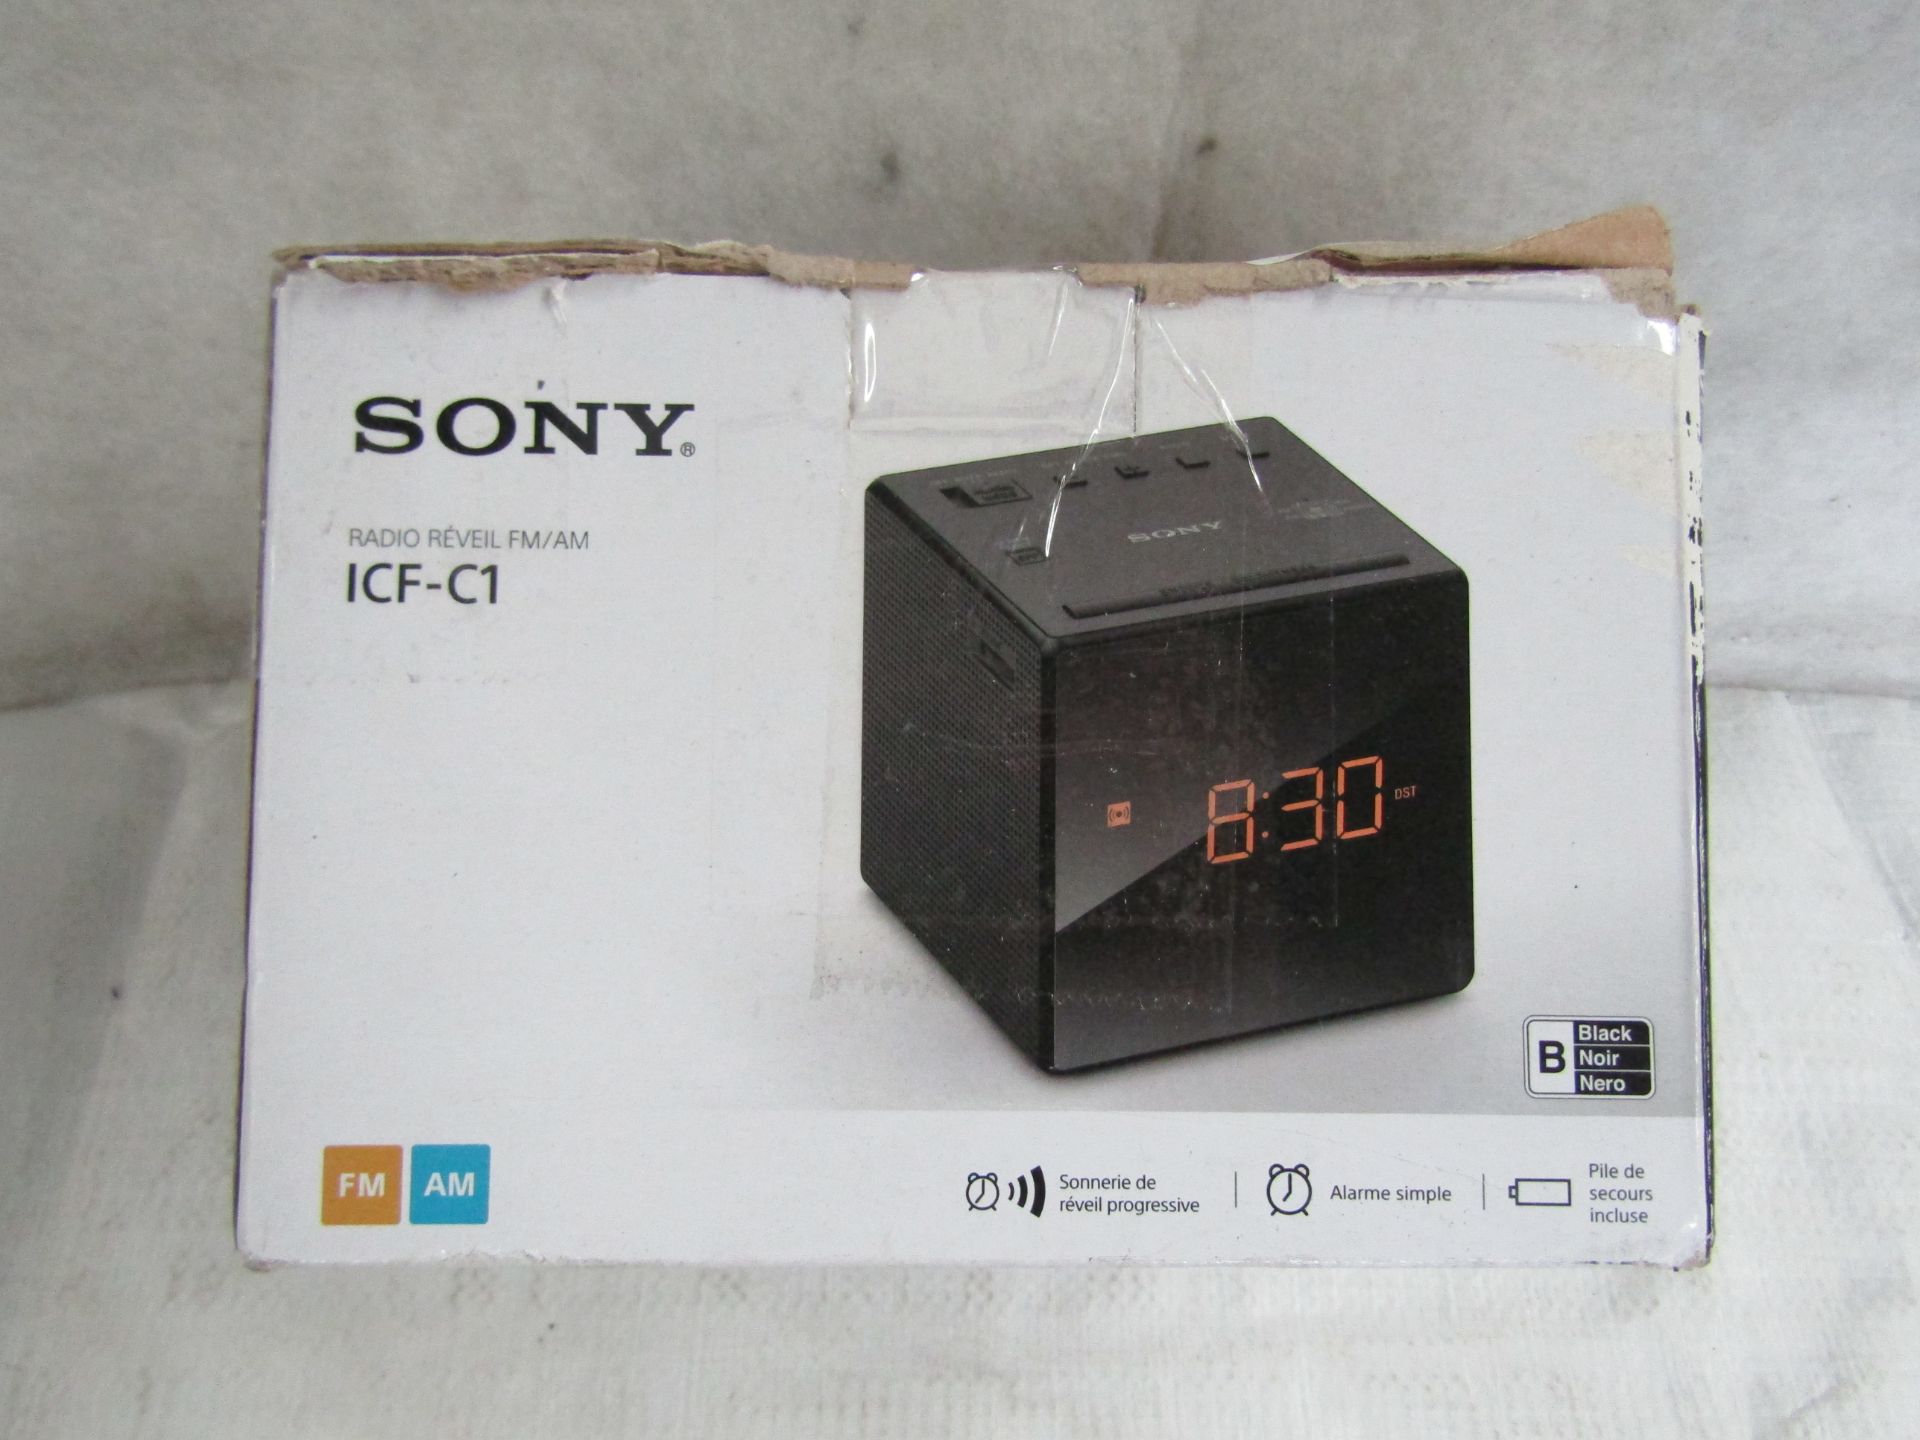 Sony Radio Reveil FM/AM, Model: ICF-C1 - Unchecked & Boxed - RRP CIRCA £29.99